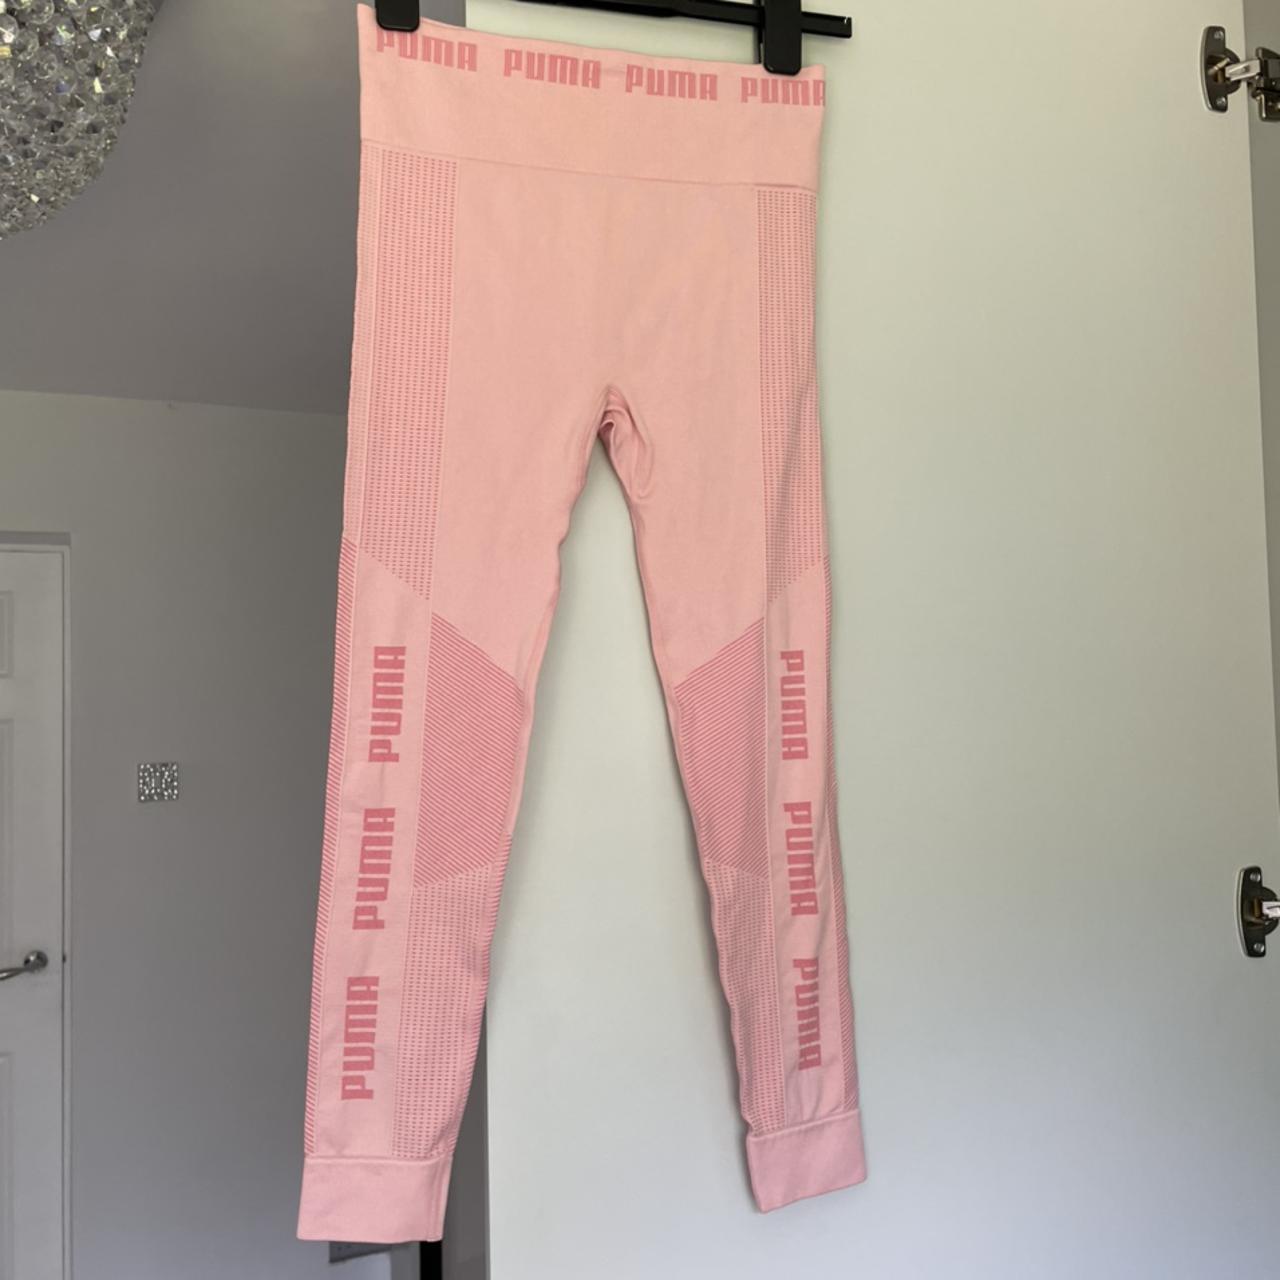 Puma Evoknit seamless leggings in soft pink